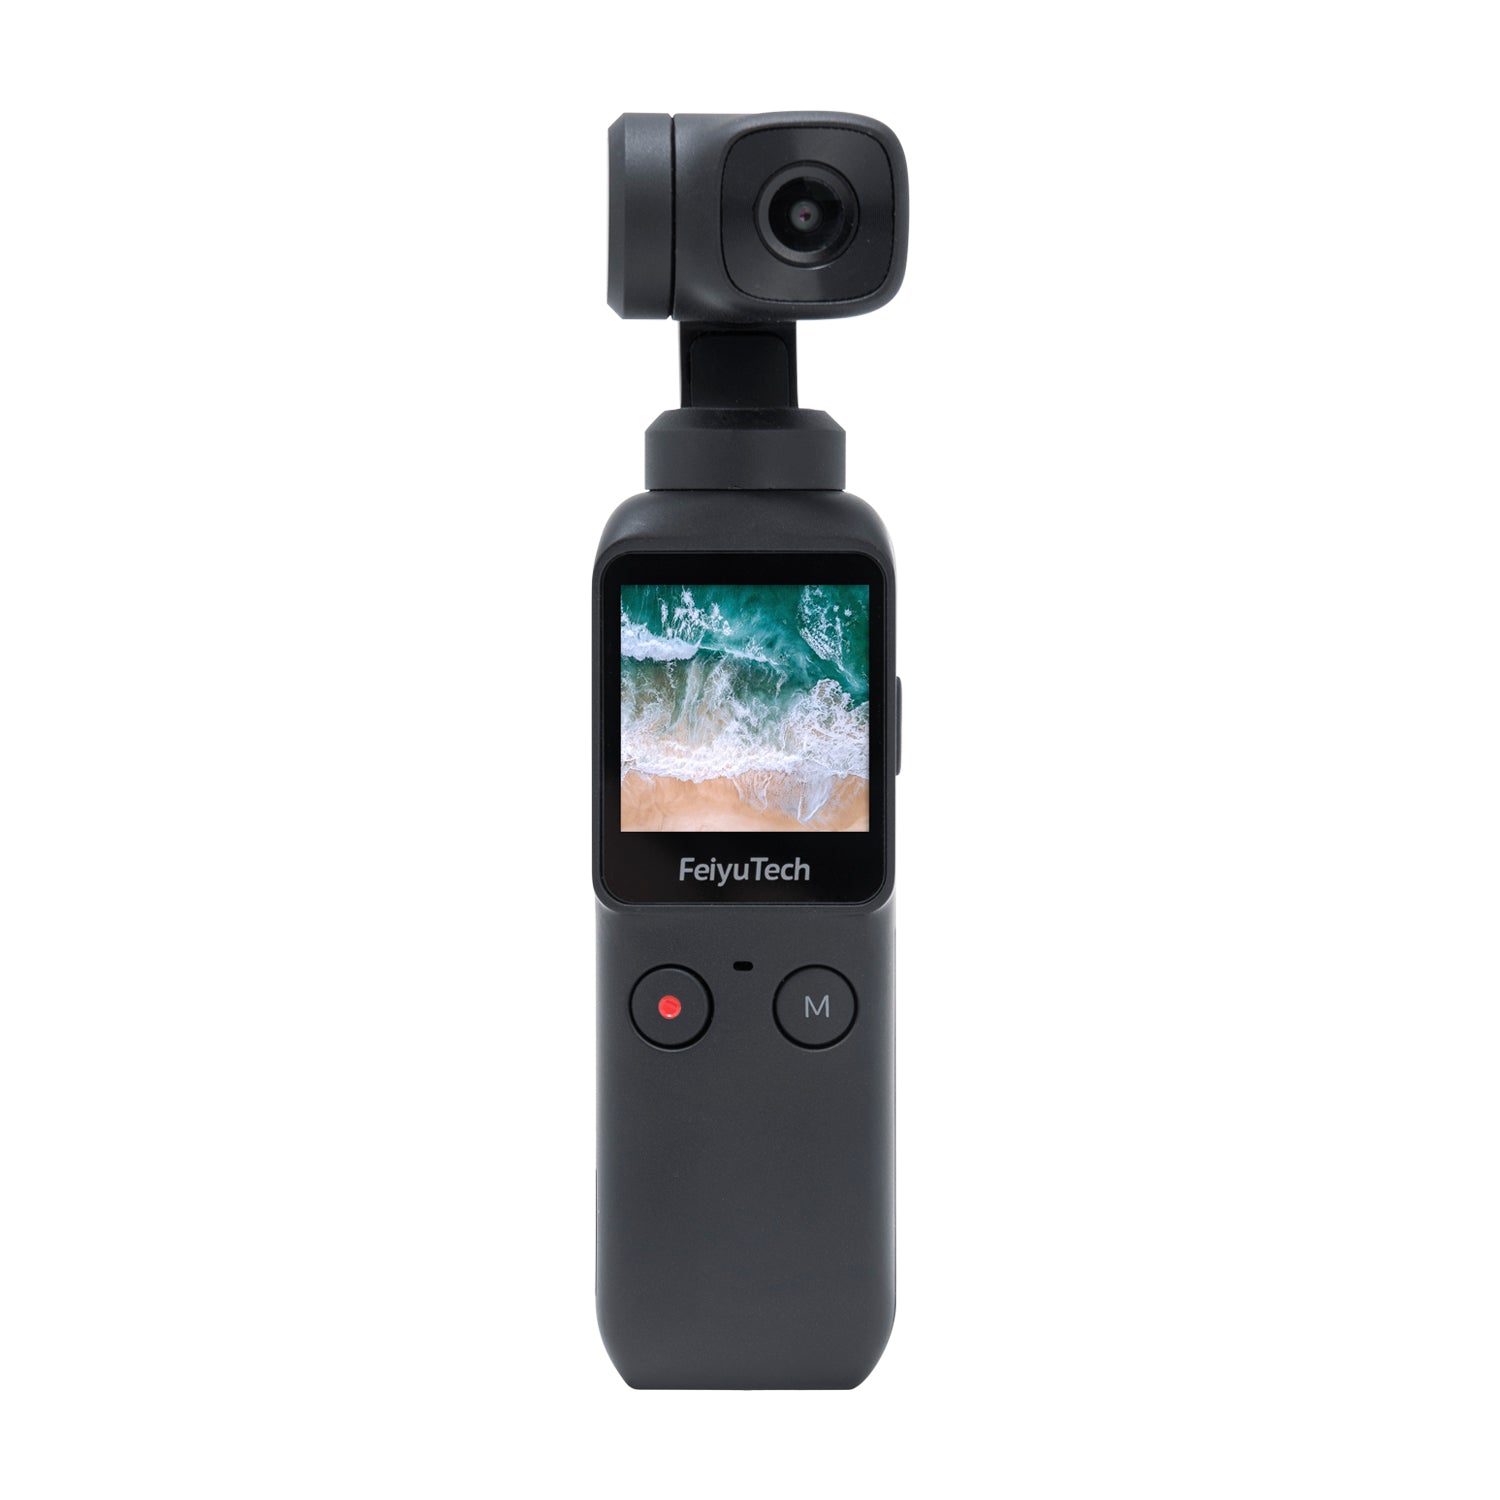 Feiyu Pocket Neue intelligente kompakte 4K 6-Achsen-Handkamera